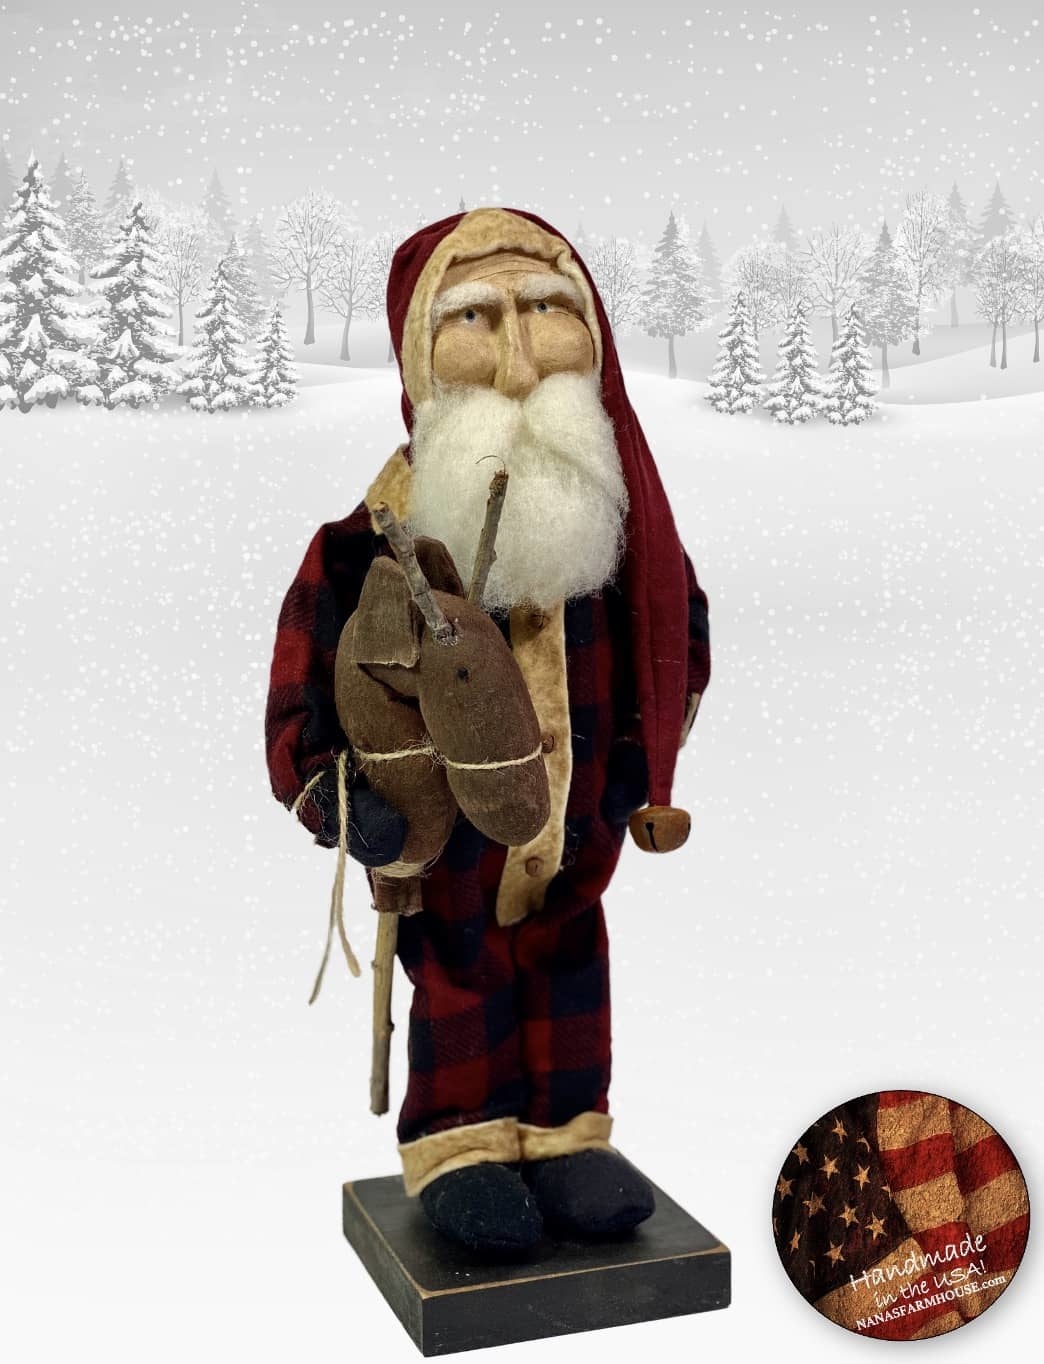 Nana's Farmhouse Primitive Santa in Buffalo Check holding Reindeer Stick Toy - 13" T Brand: Nana's Farmhouse